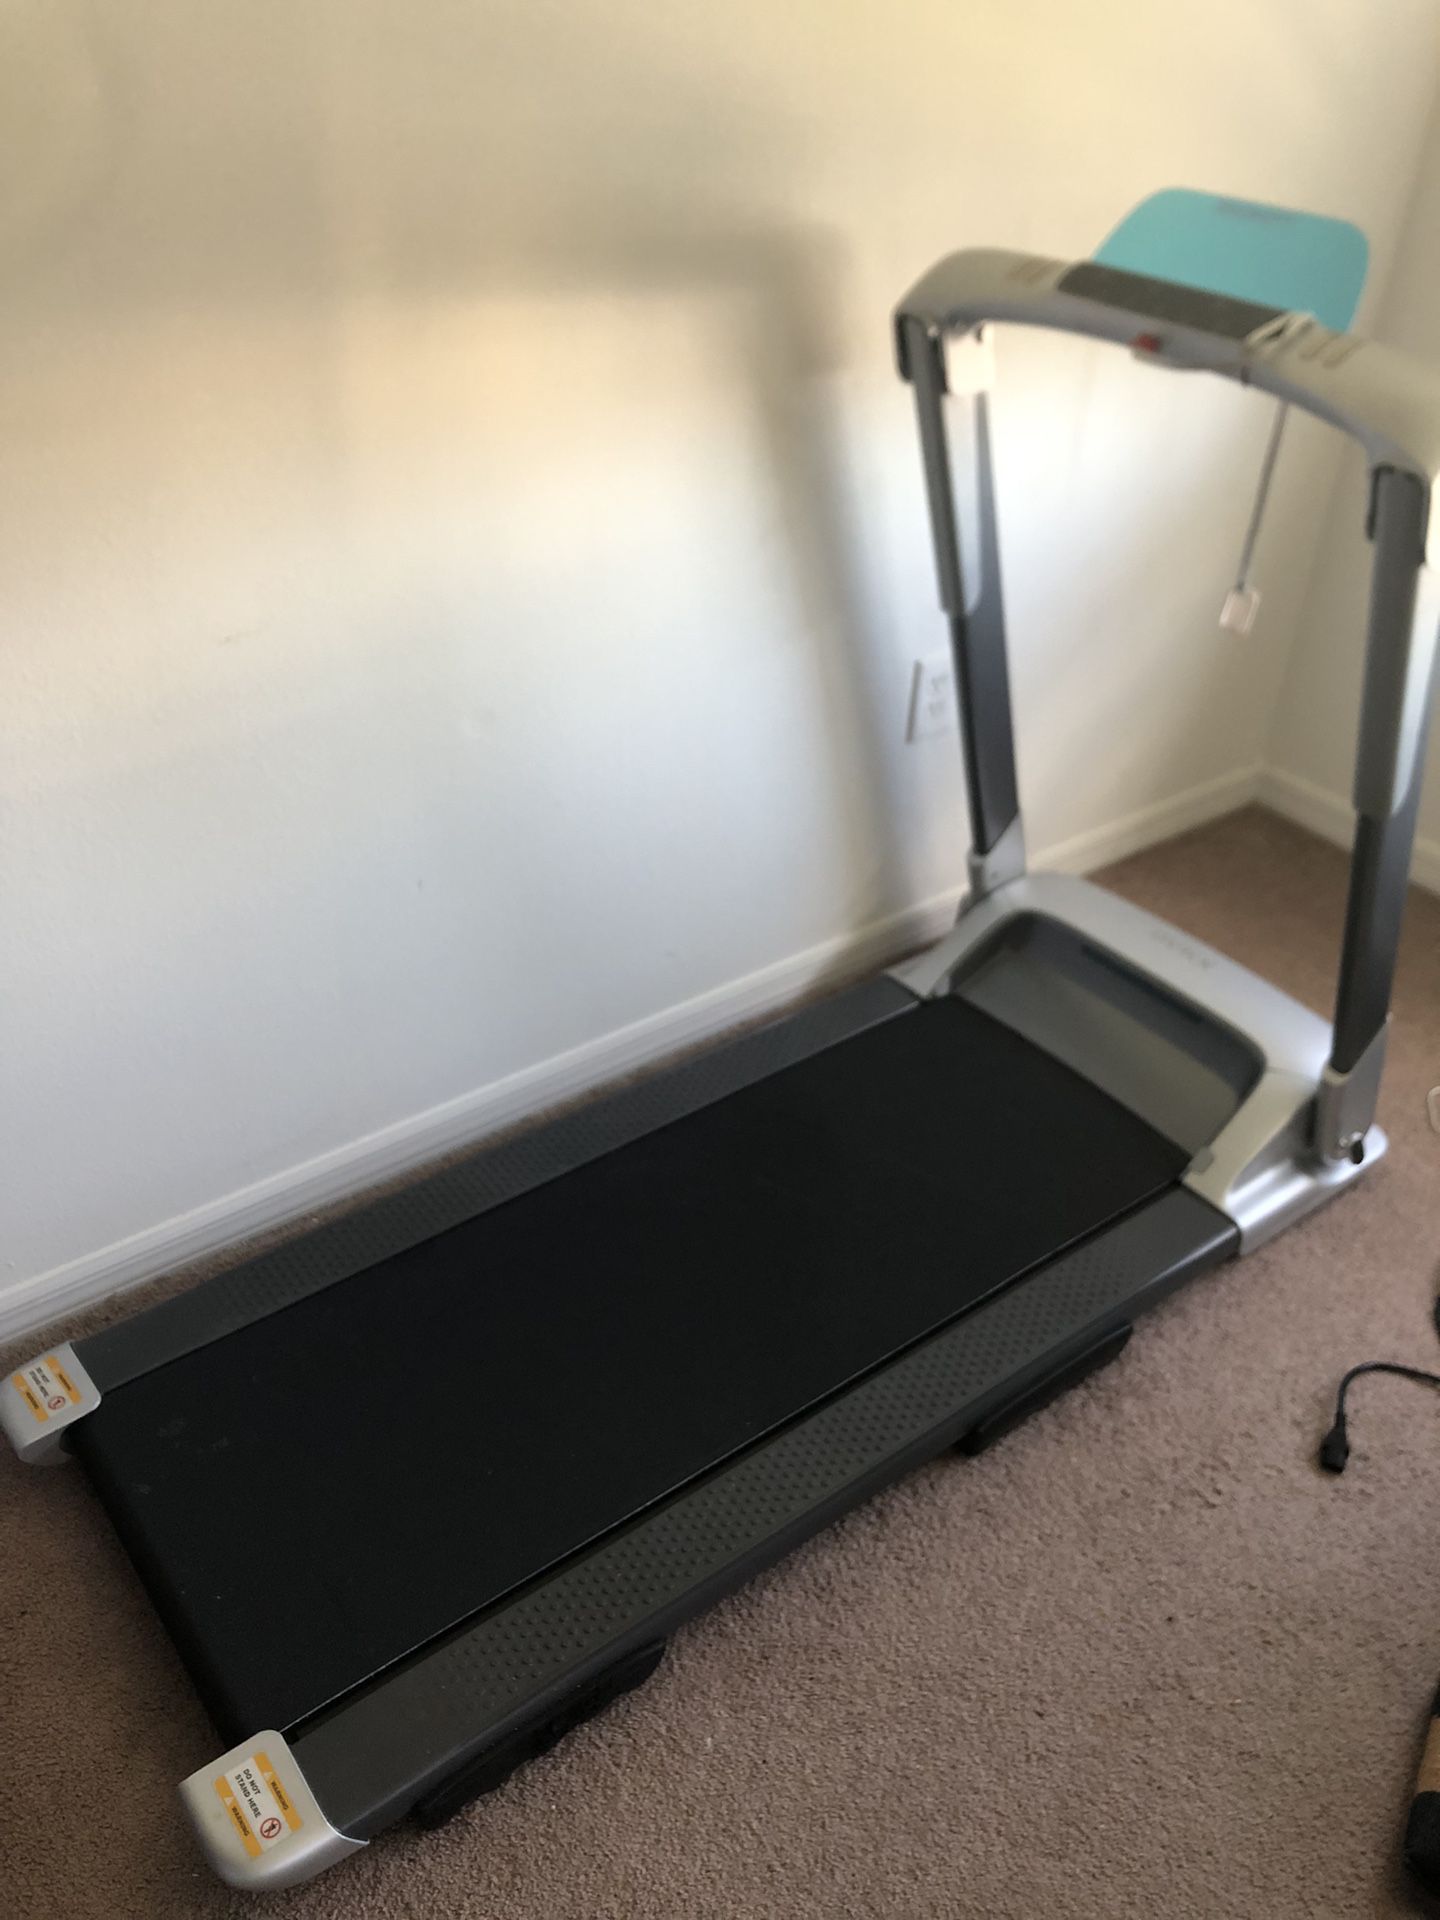 Compact Folding Treadmill